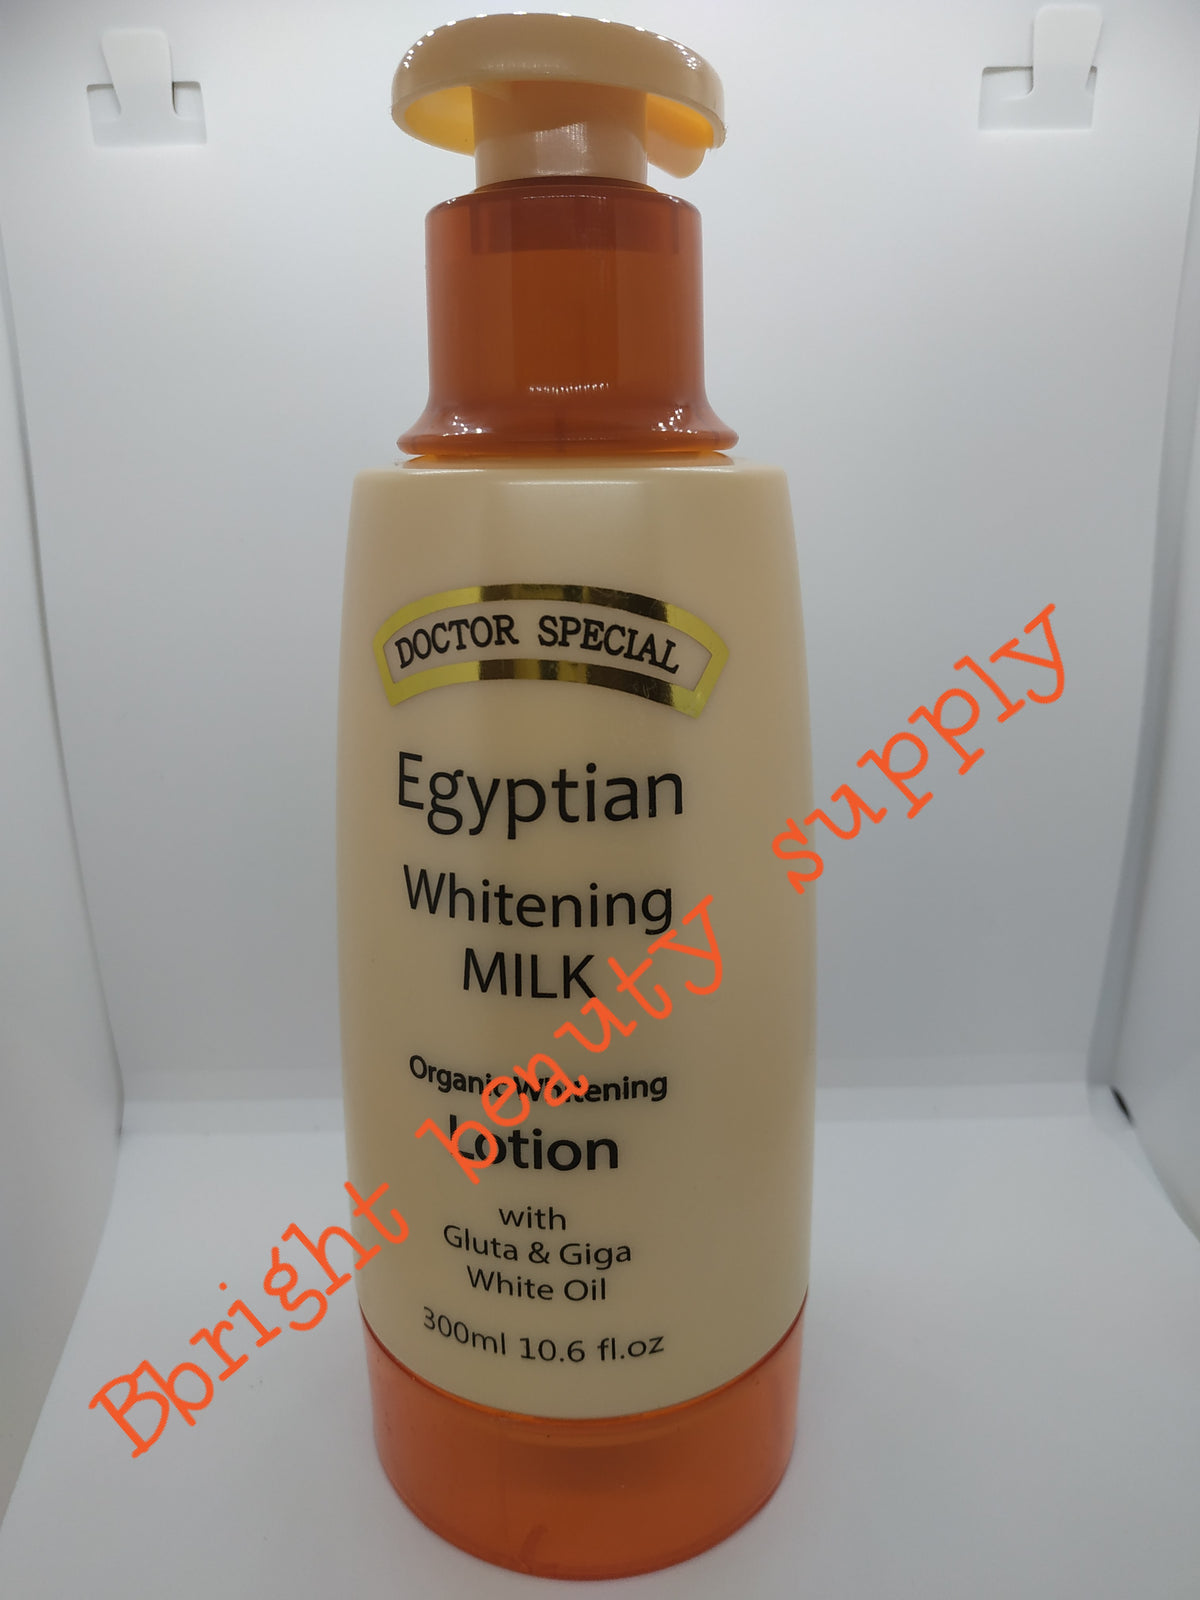 Doctor Special Egyptian Whitening Milk Organic Whitening Lotion 300ml